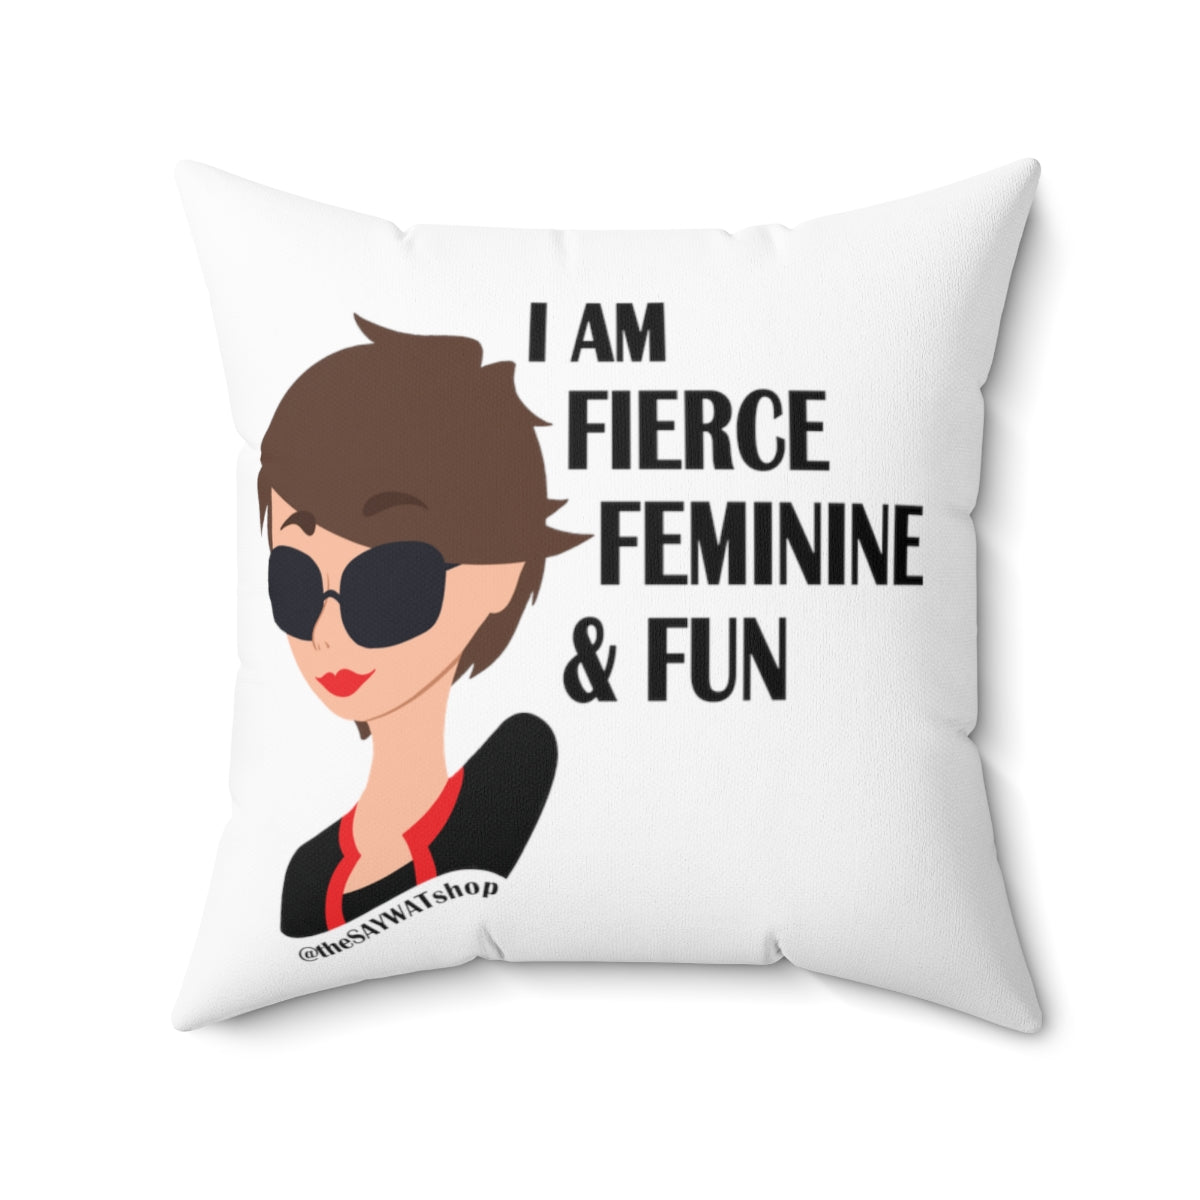 Fierce Feminine Fun - BR - Square Pillow